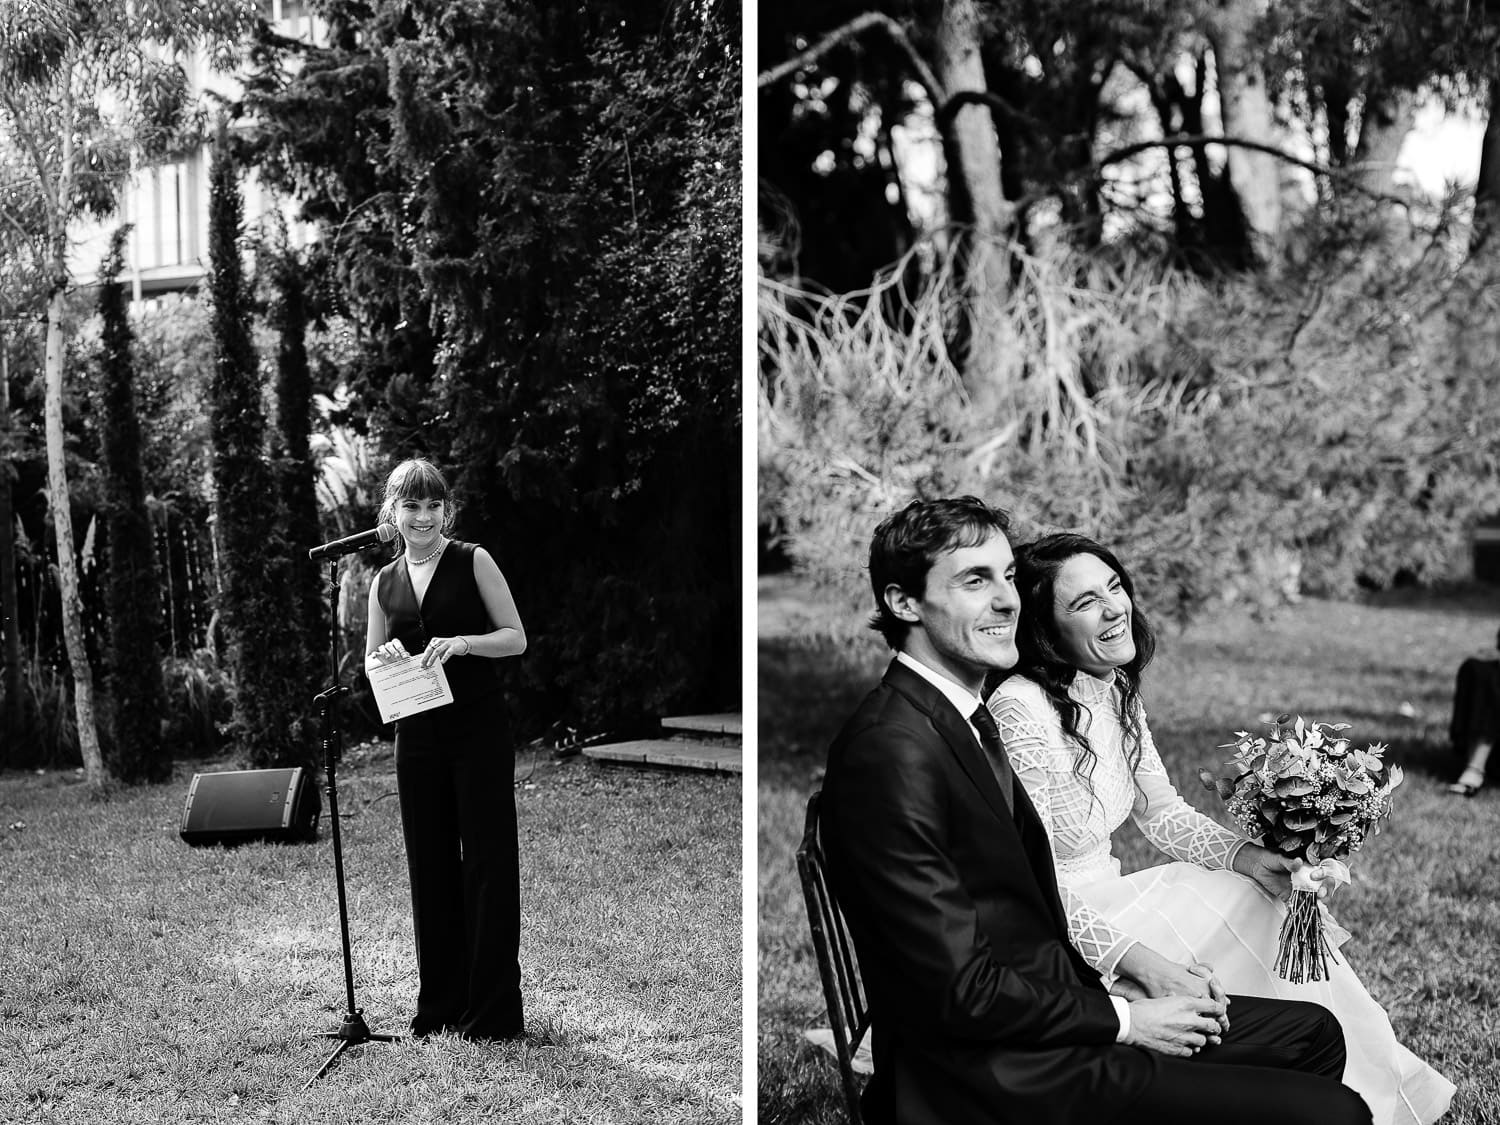 fotografias boda moderna y alternativa